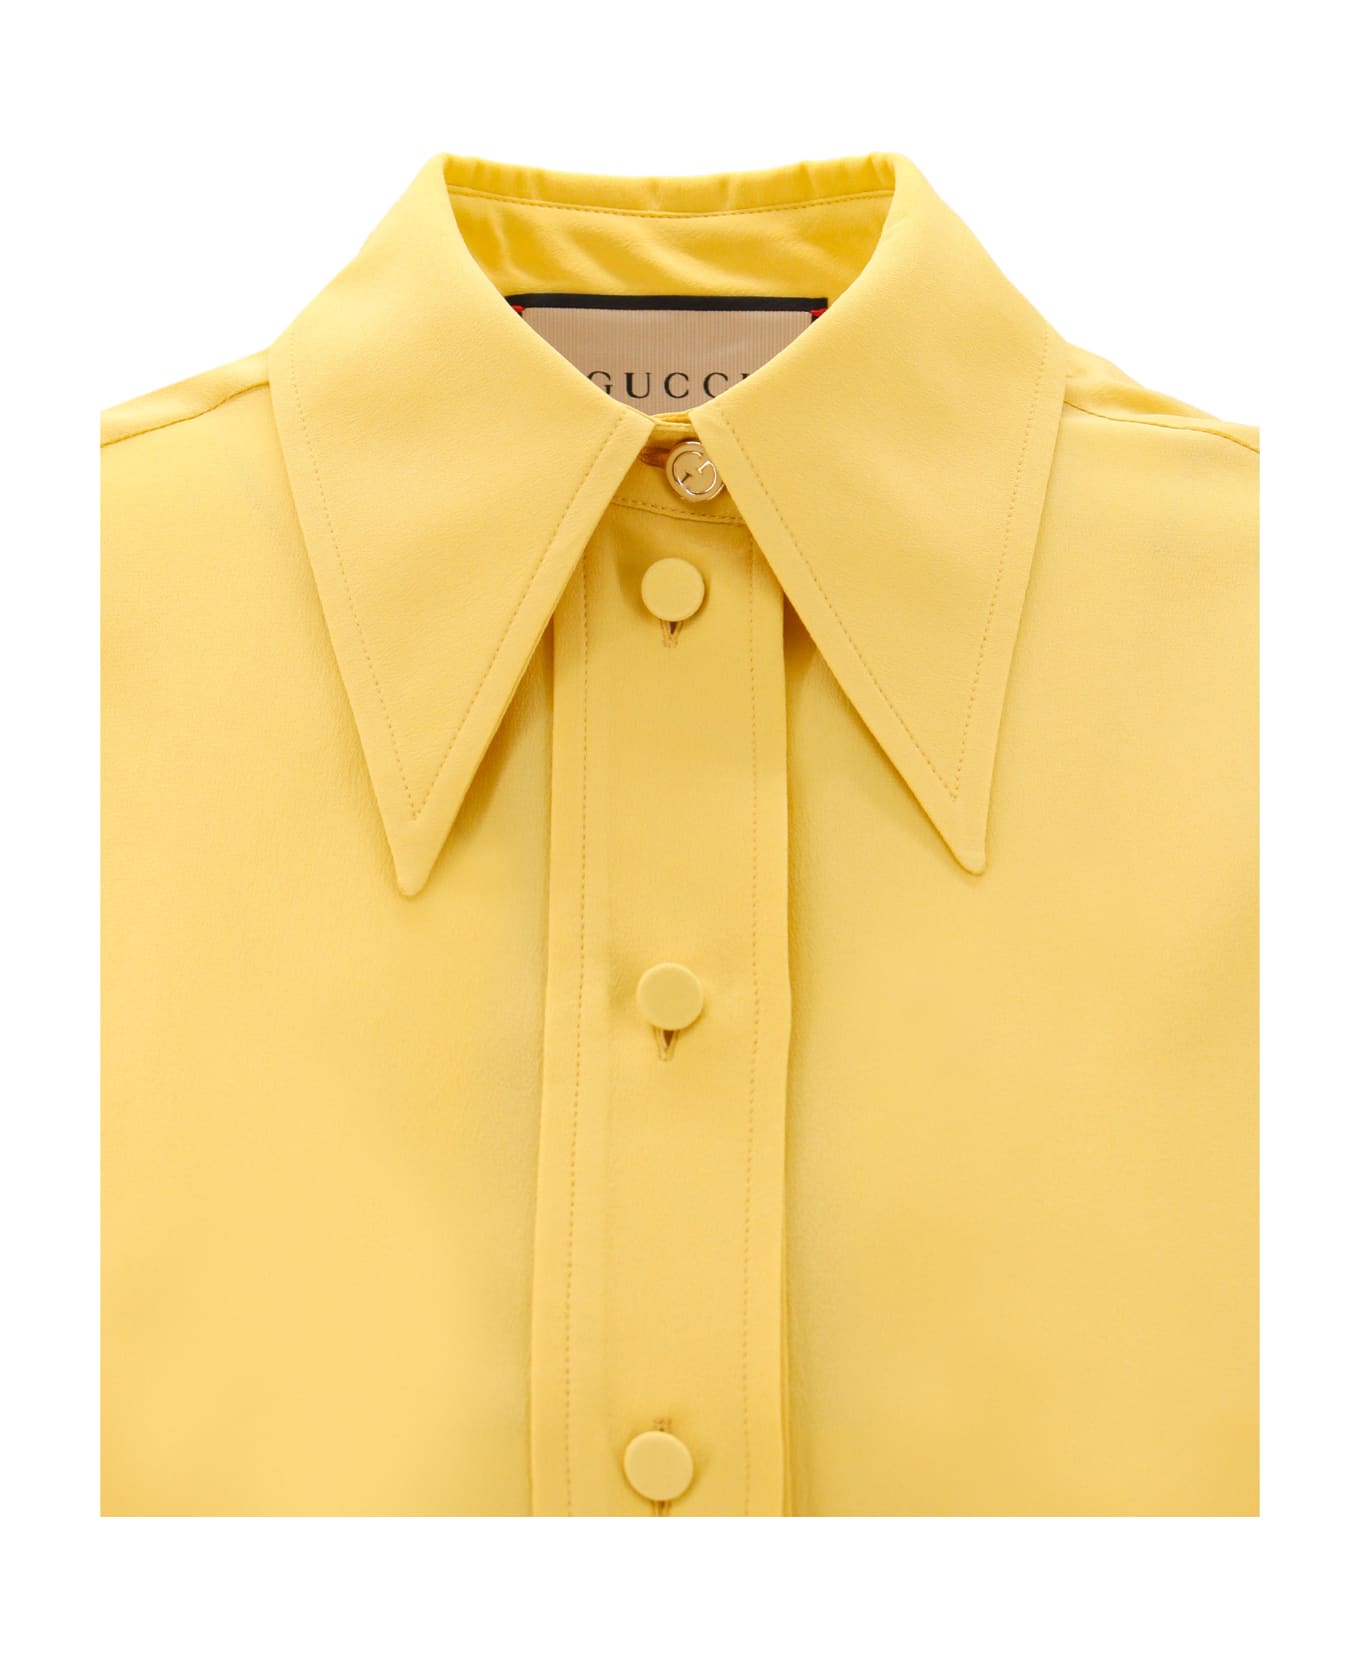 Gucci Shirt - Yellow